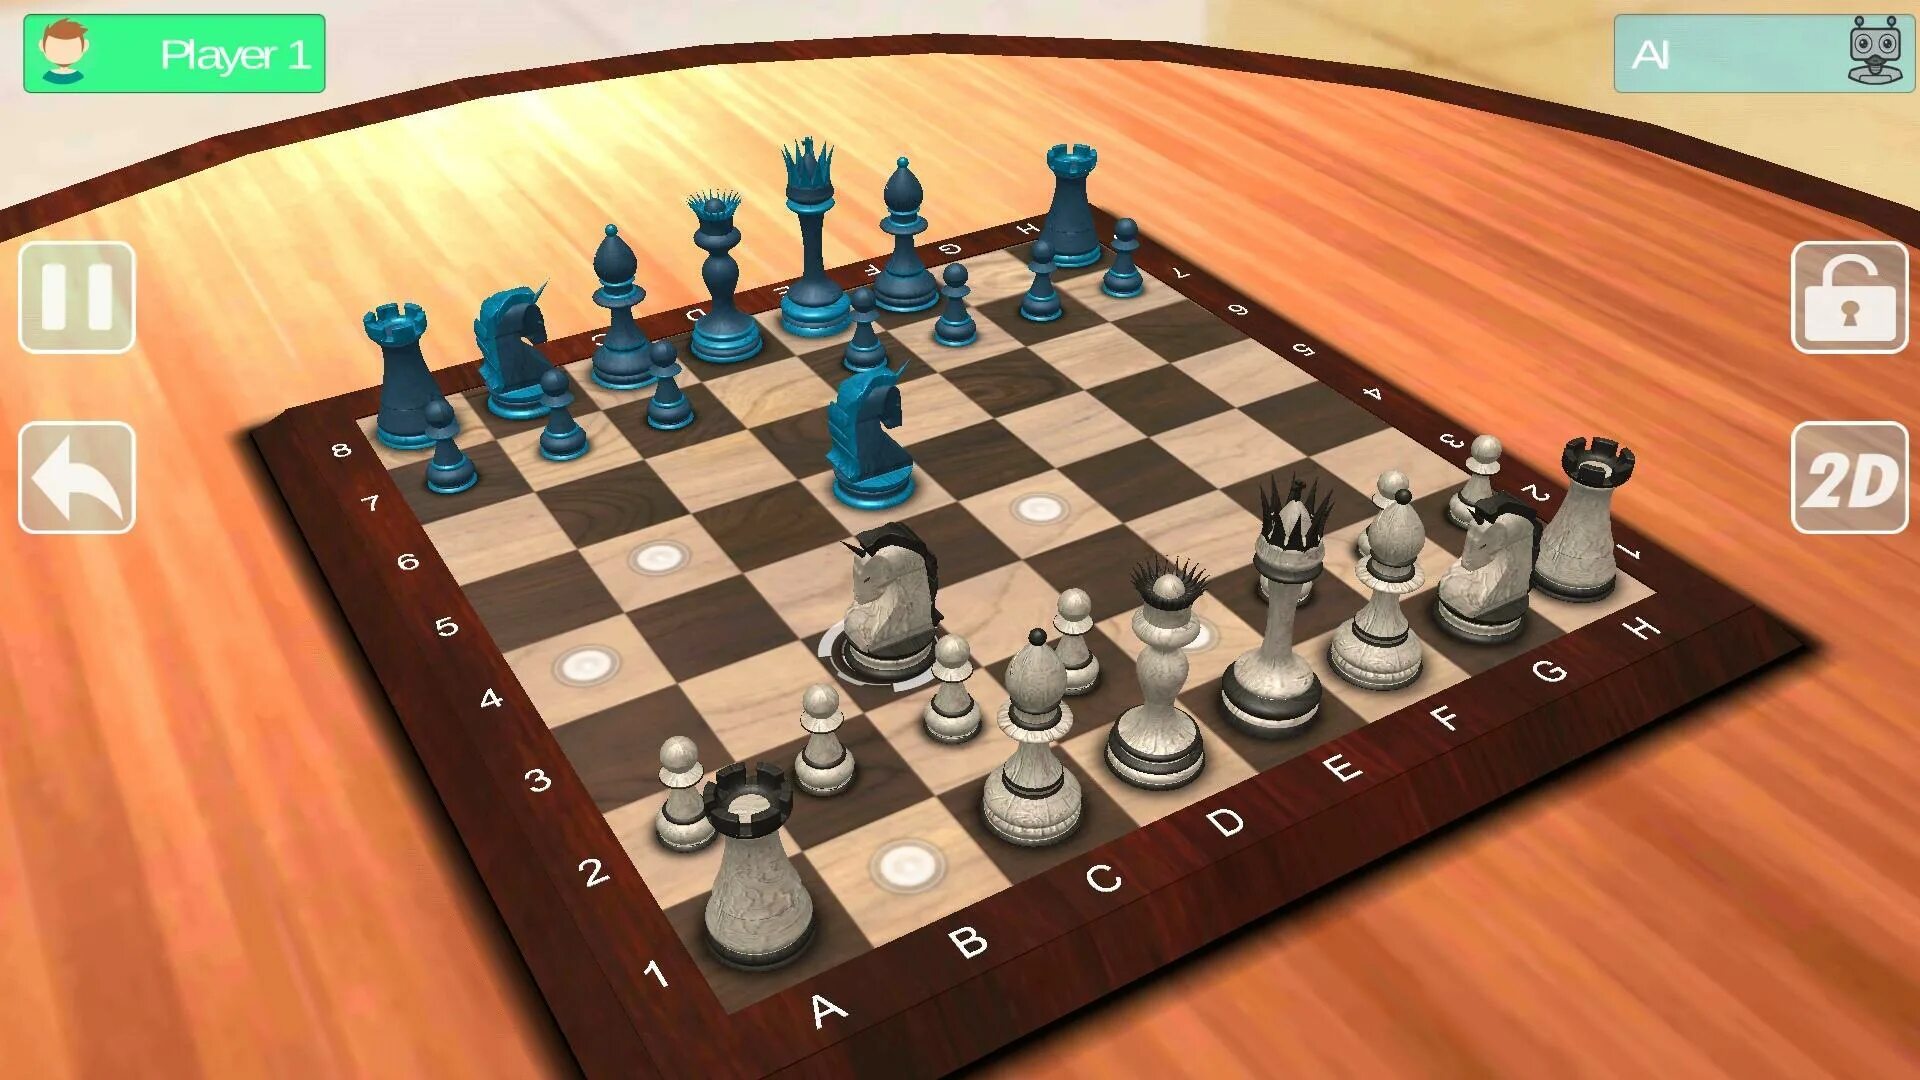 CHESSMASTER. CHESSMASTER 3d. Шахматы и мода. Мастер шахмат. Шахмат новые игры